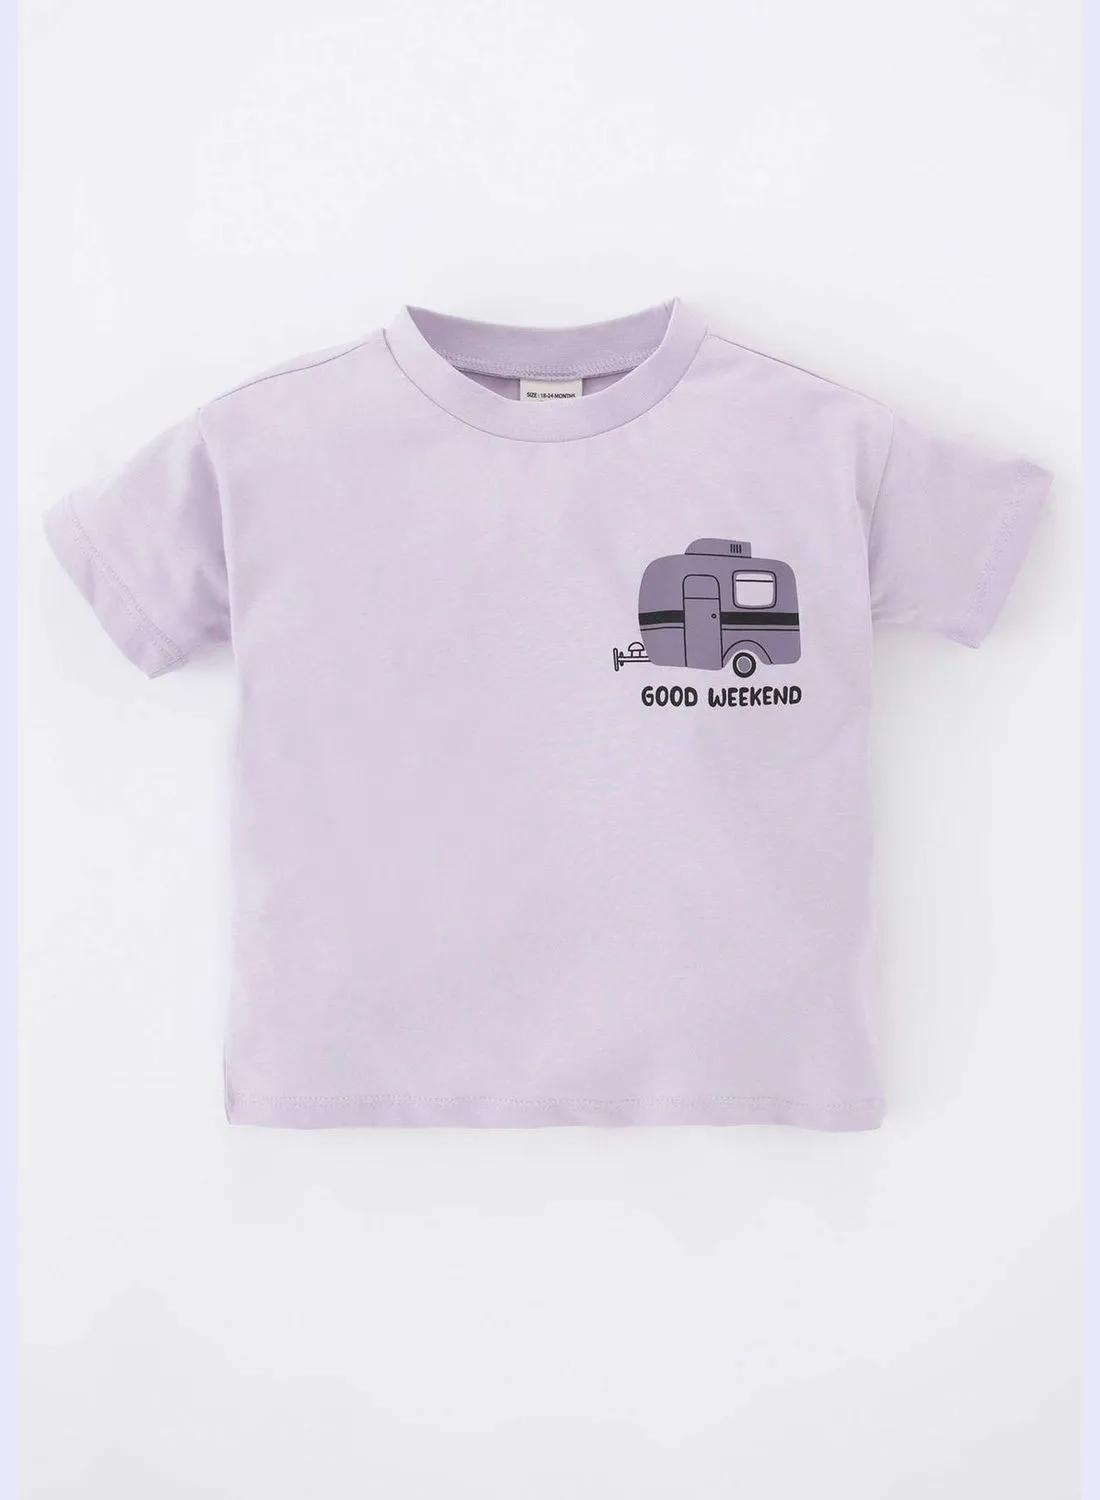 DeFacto BabyBoy Knitted Short Sleeve T-Shirt